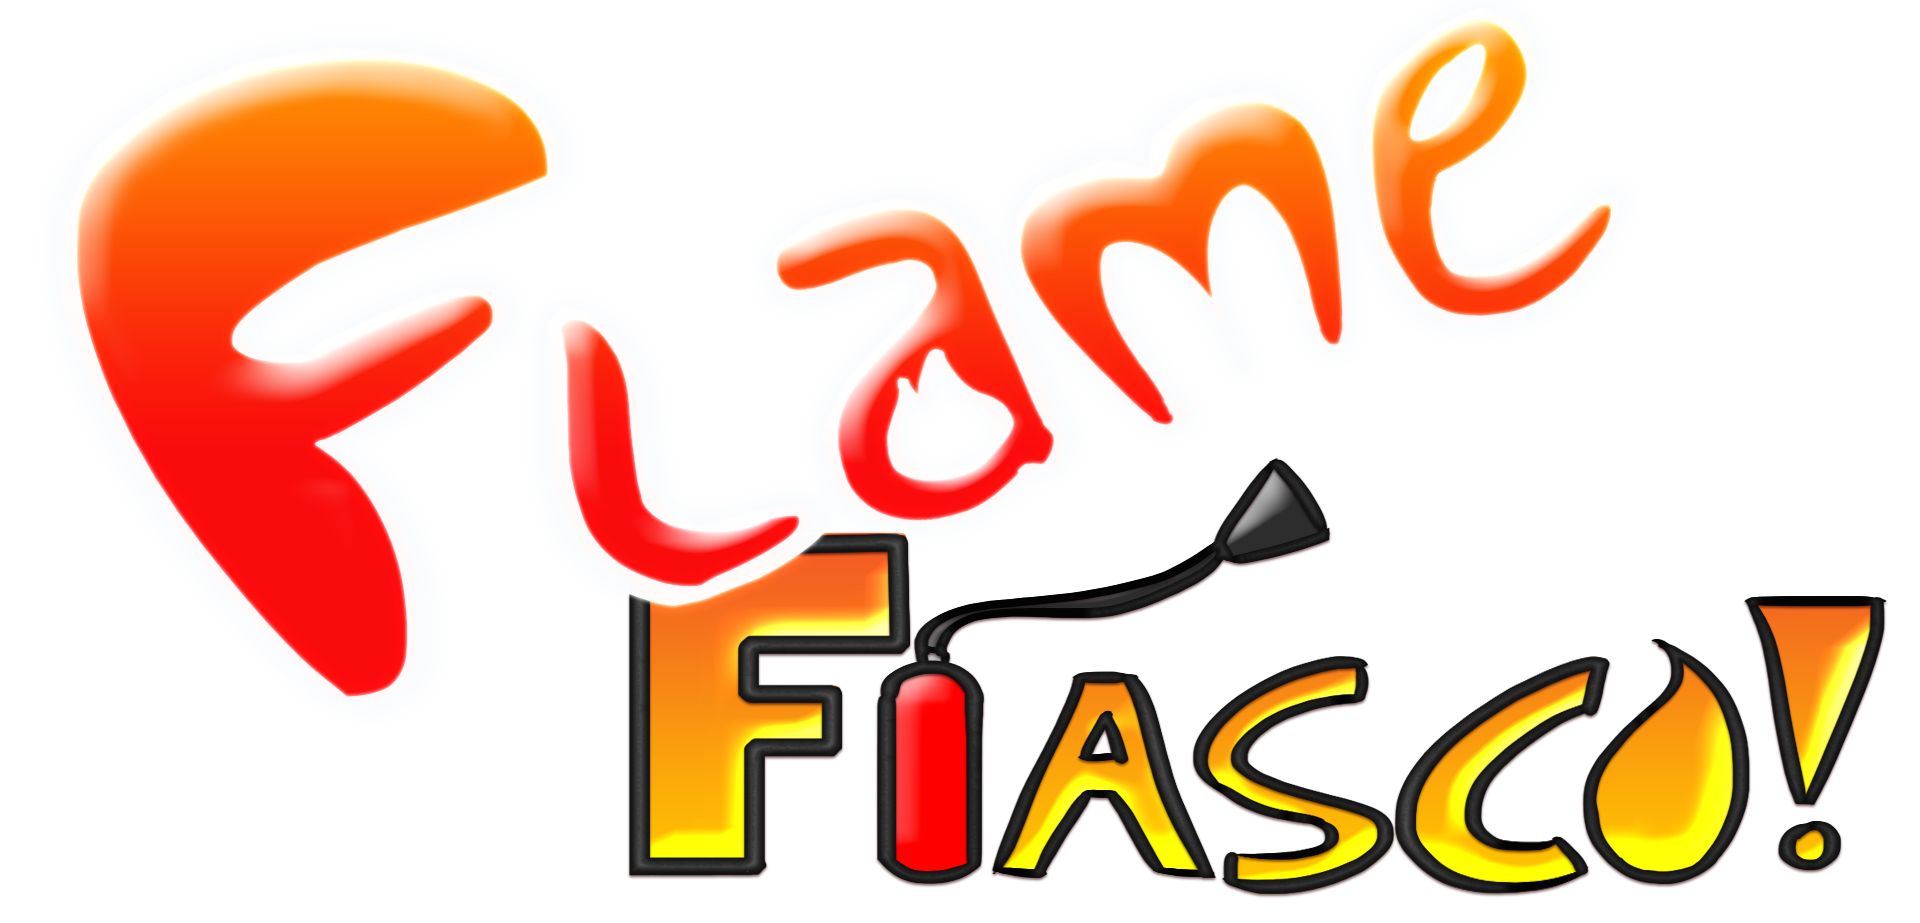 Flame Fiasco!